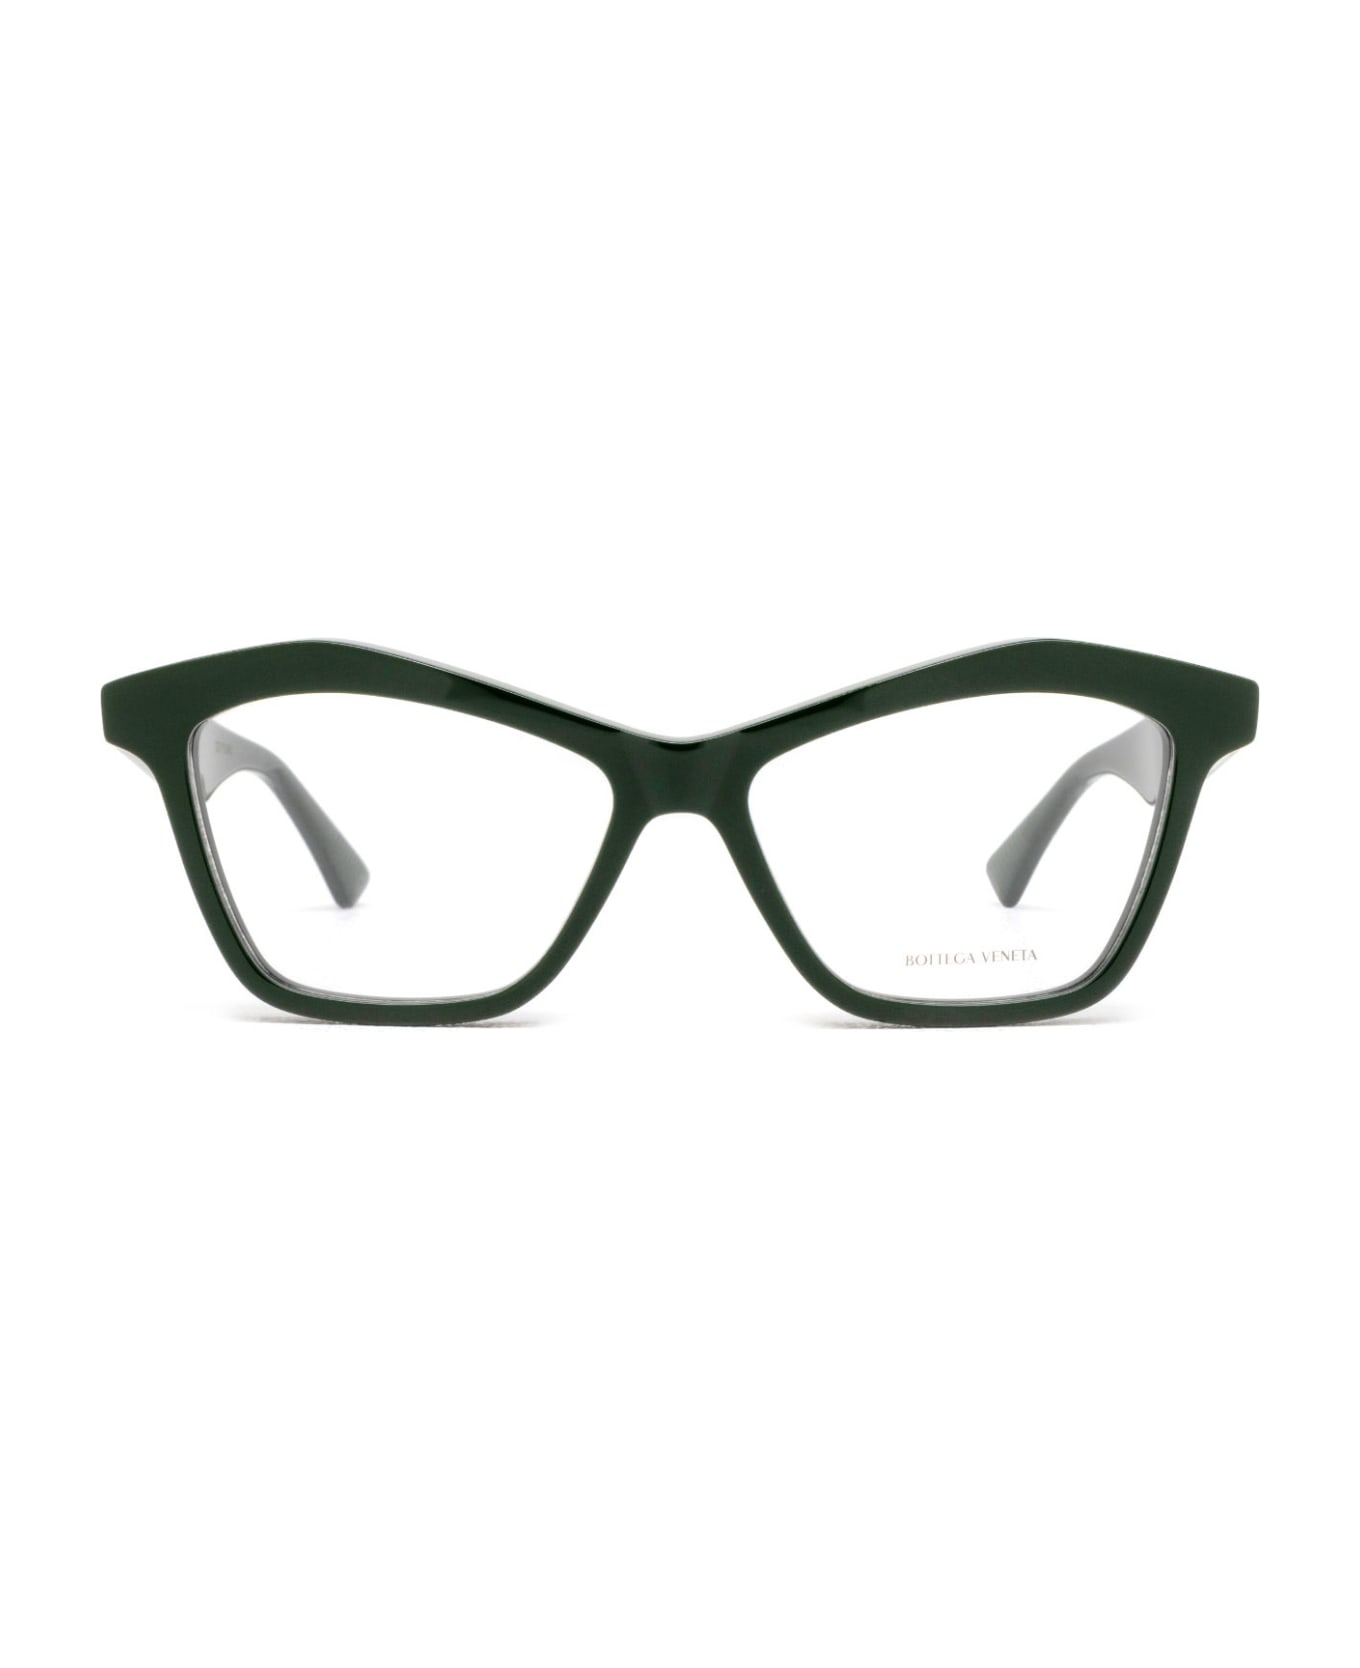 Bottega Veneta Eyewear Bv1096o Green Glasses - Green